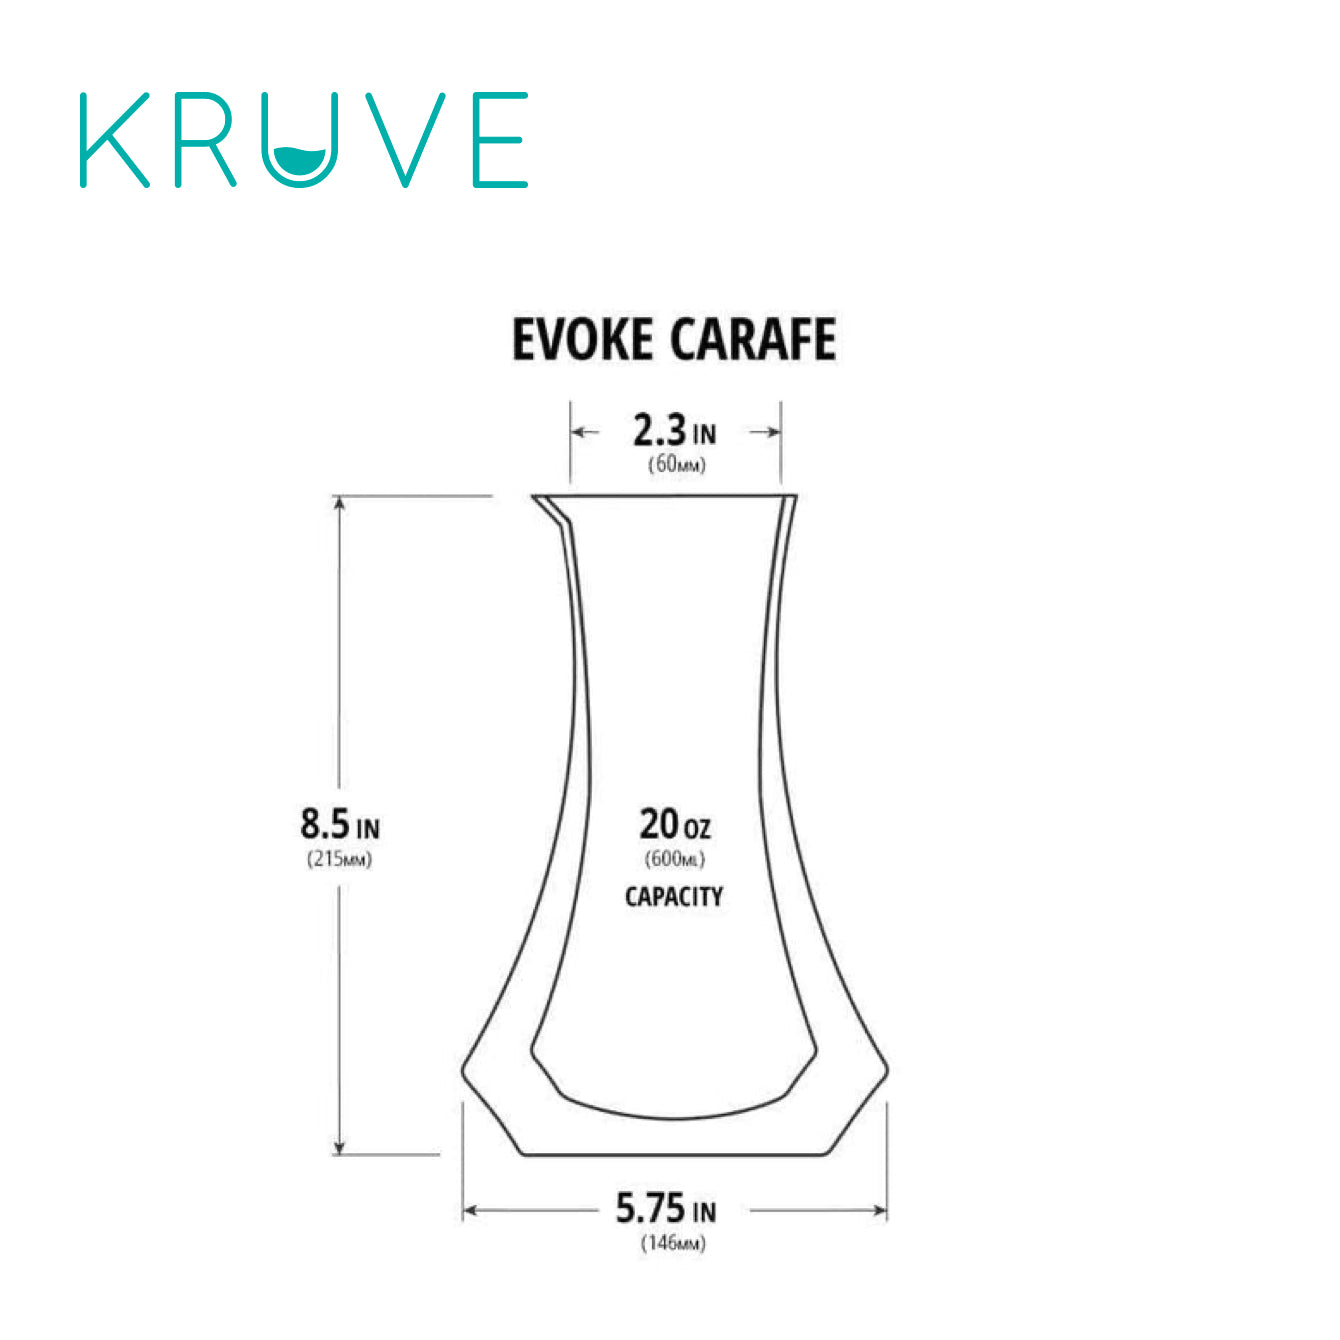 Kruve Evoke Carafe 9 lifestyle 1